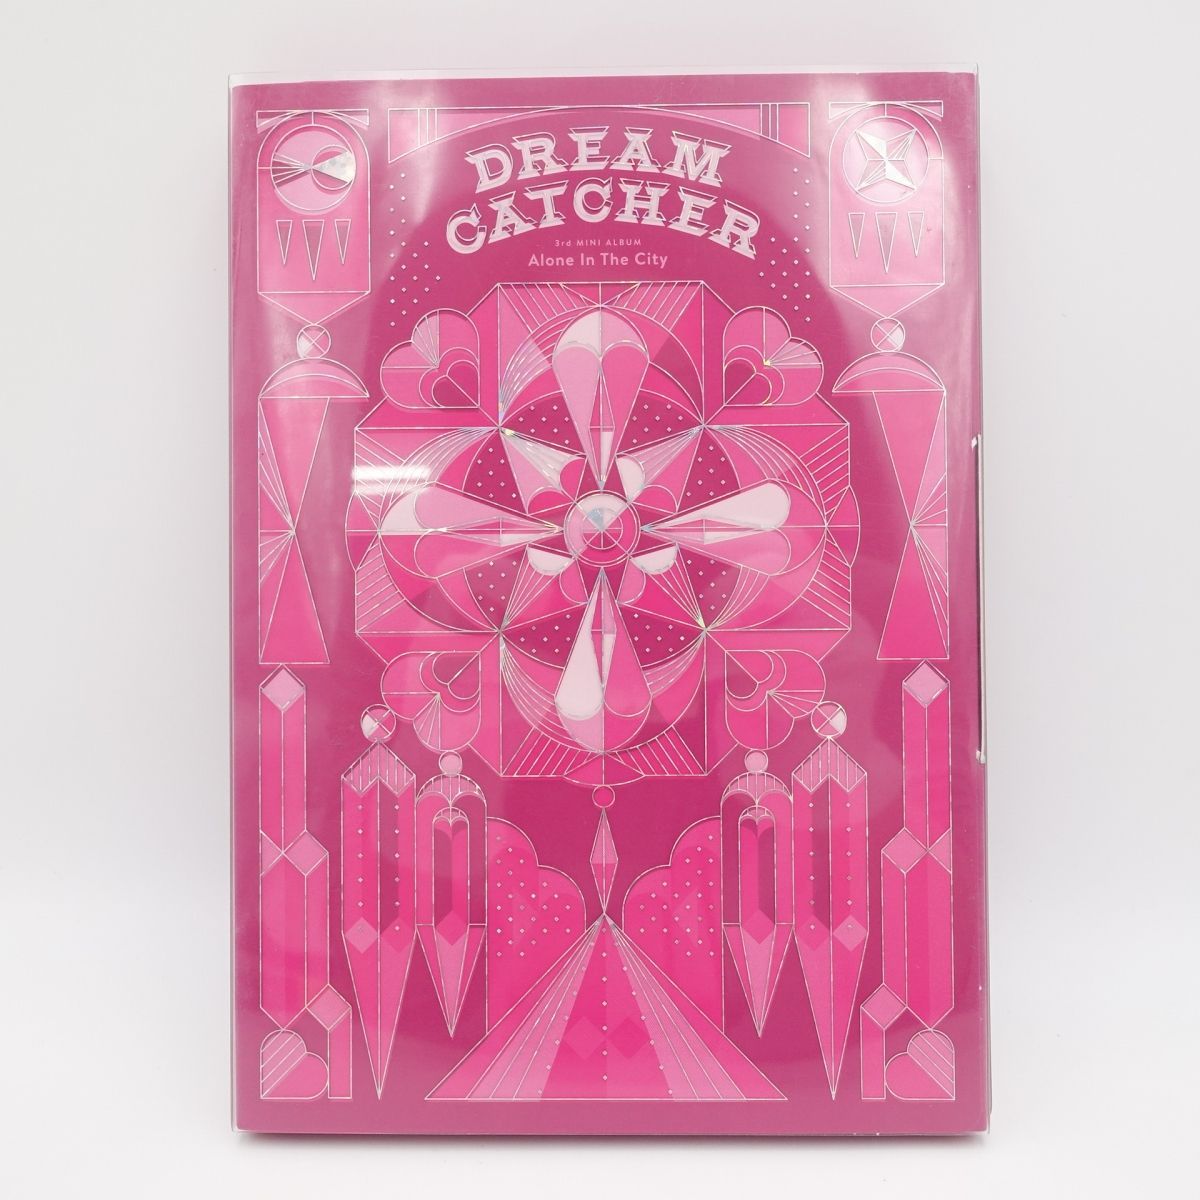 Dreamcatcher 3rd mini album Alone In The City Light ver. フォトブック CD  ドリームキャッチャー